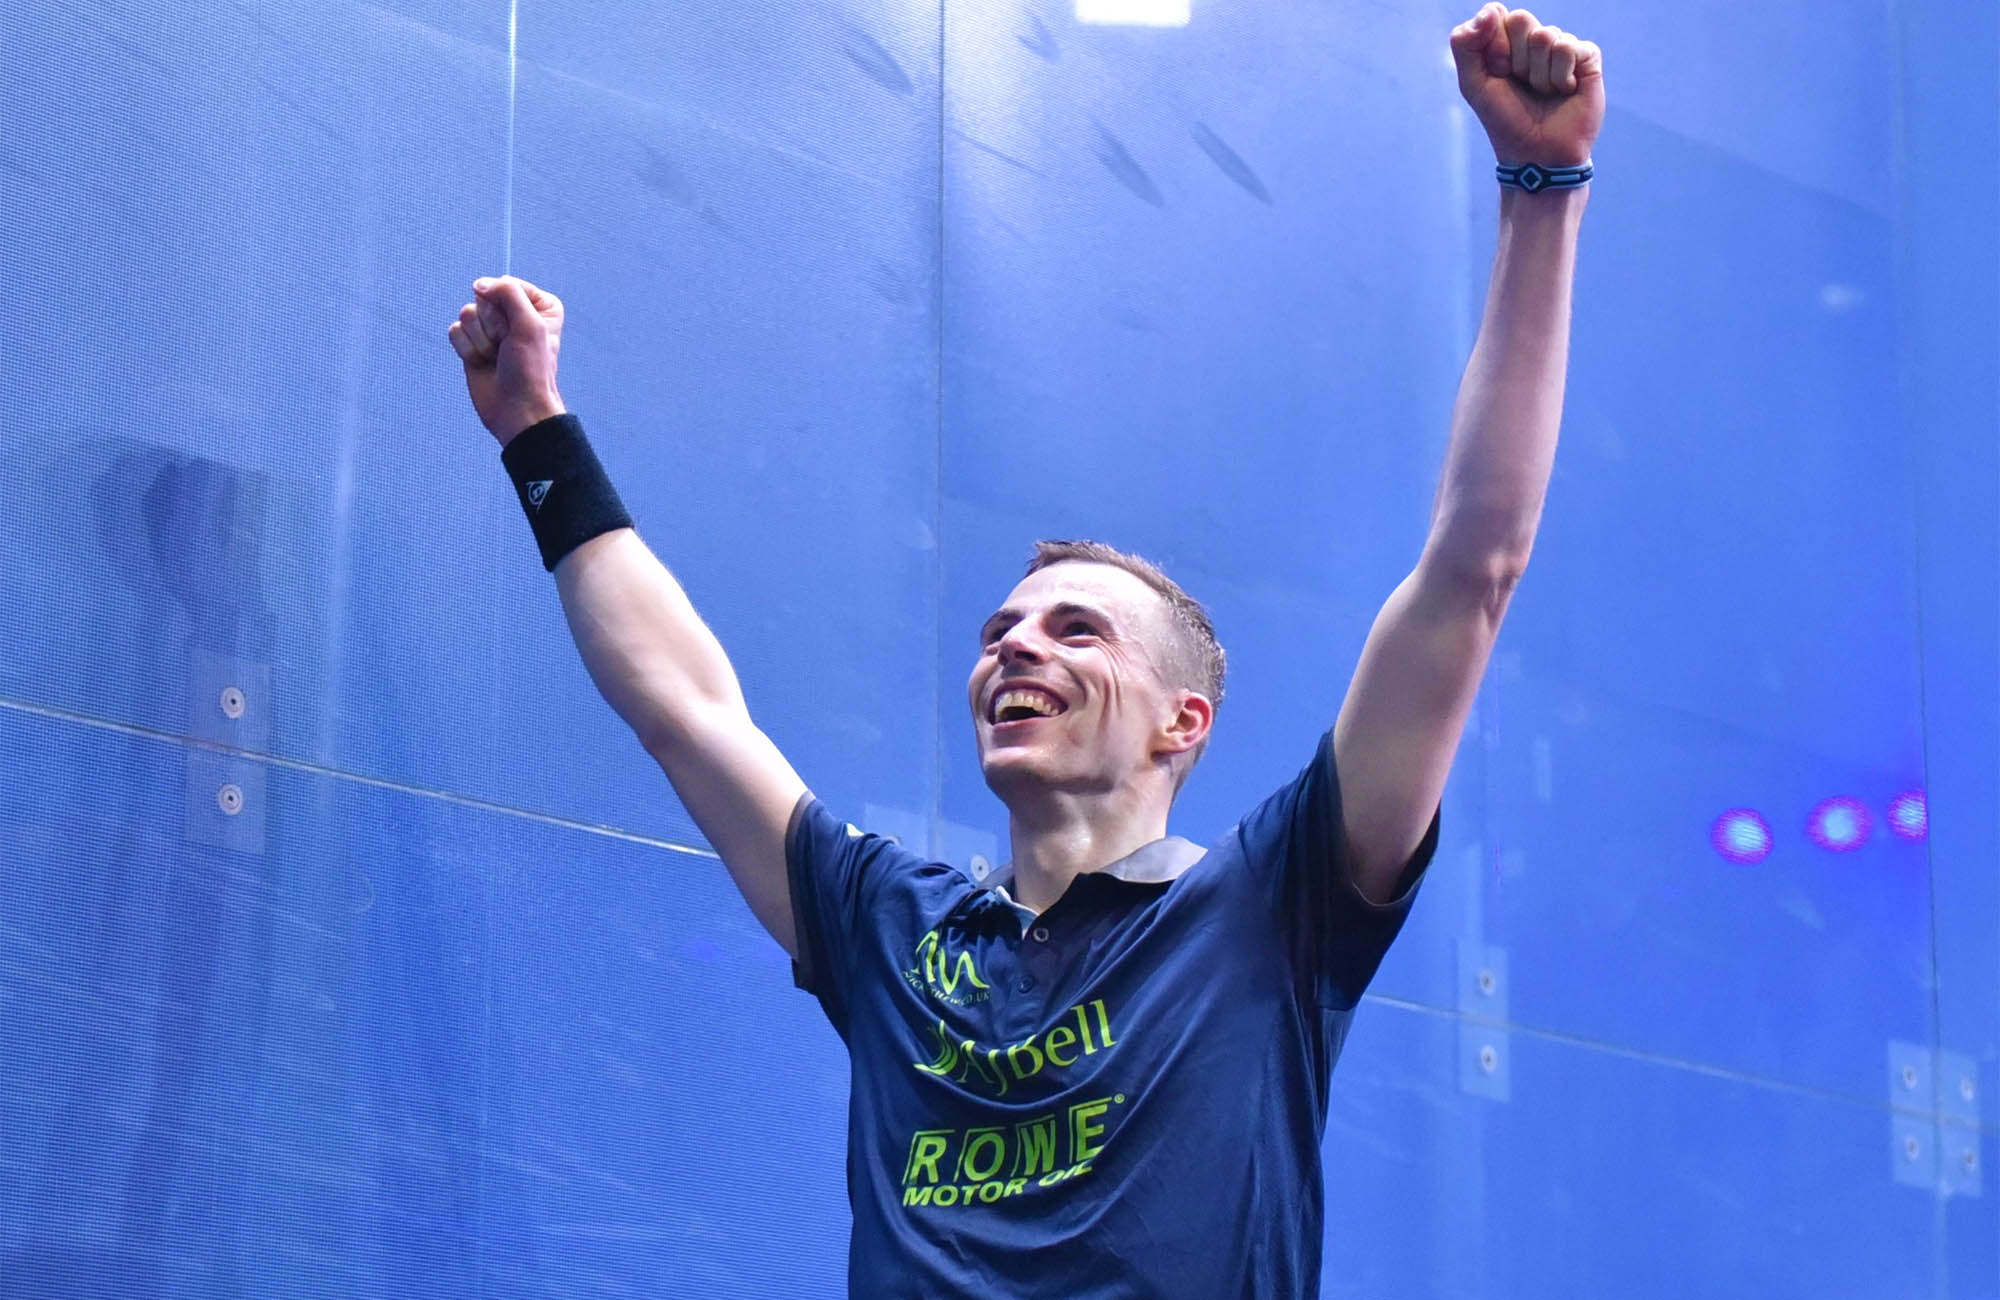 Former squash player Nick Matthew celebrating his tenth British National title